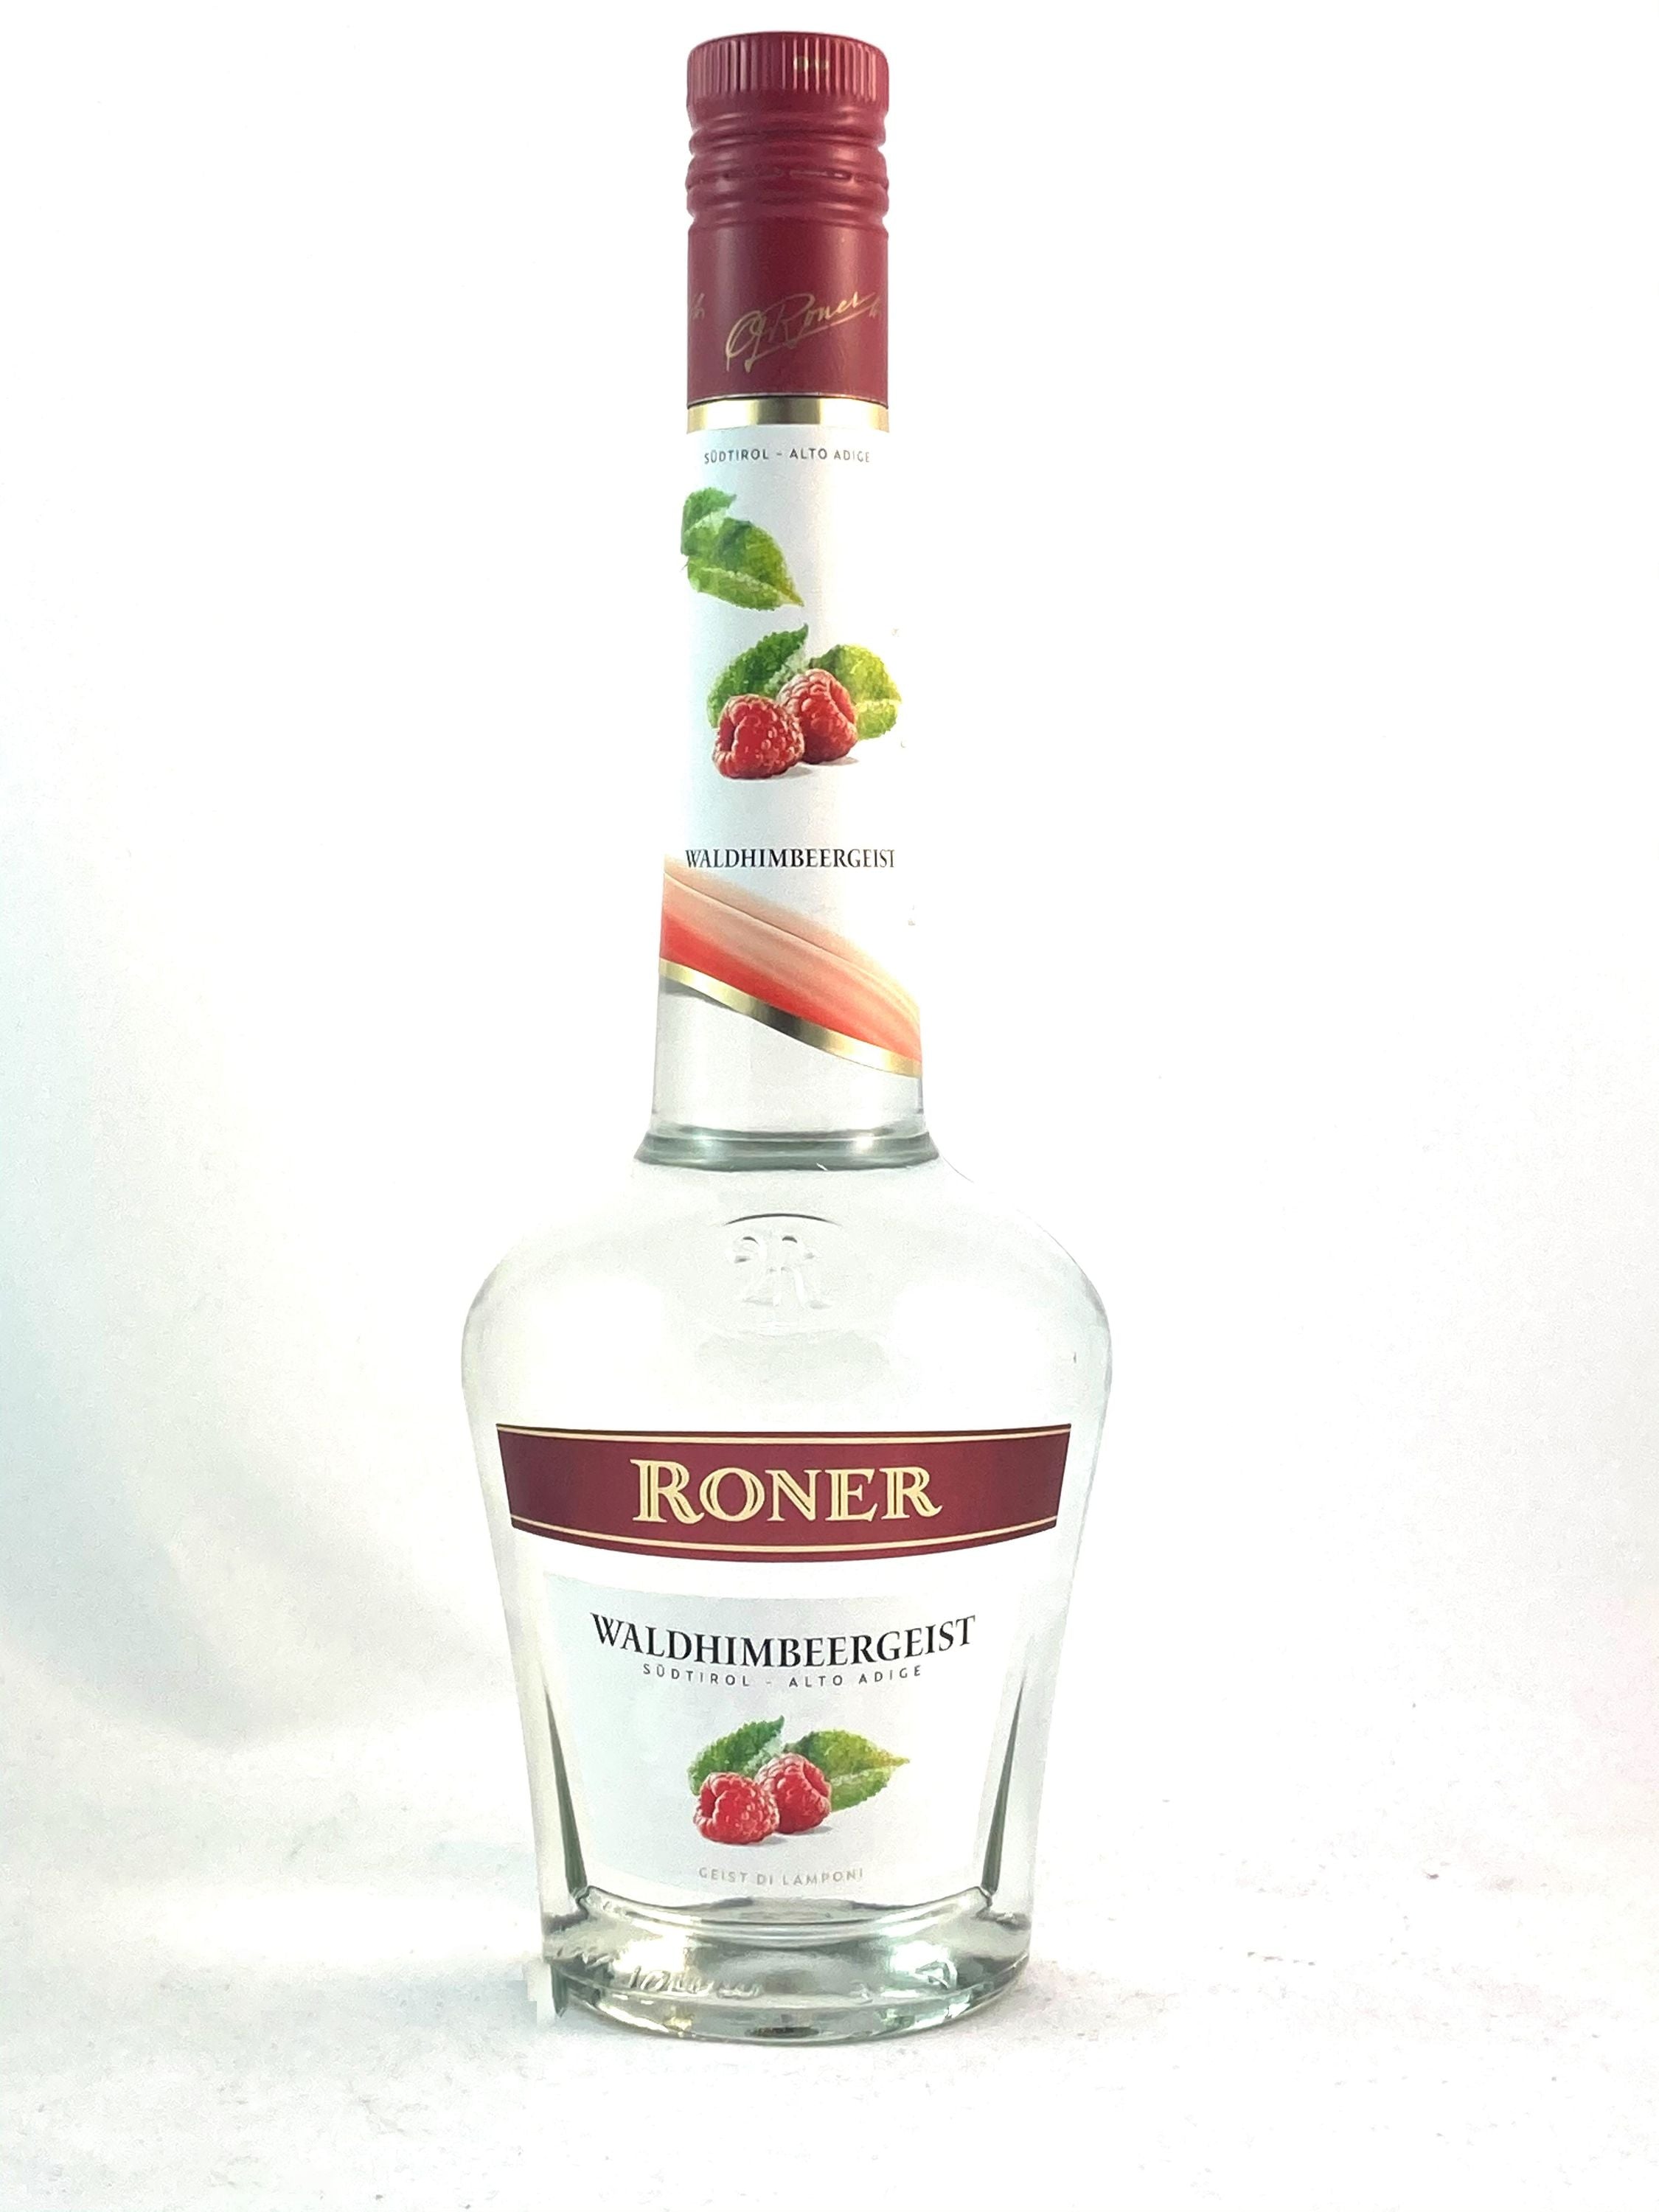 Roner forest raspberry spirit 0.7l, alc. 40% by volume, Italian brandy 